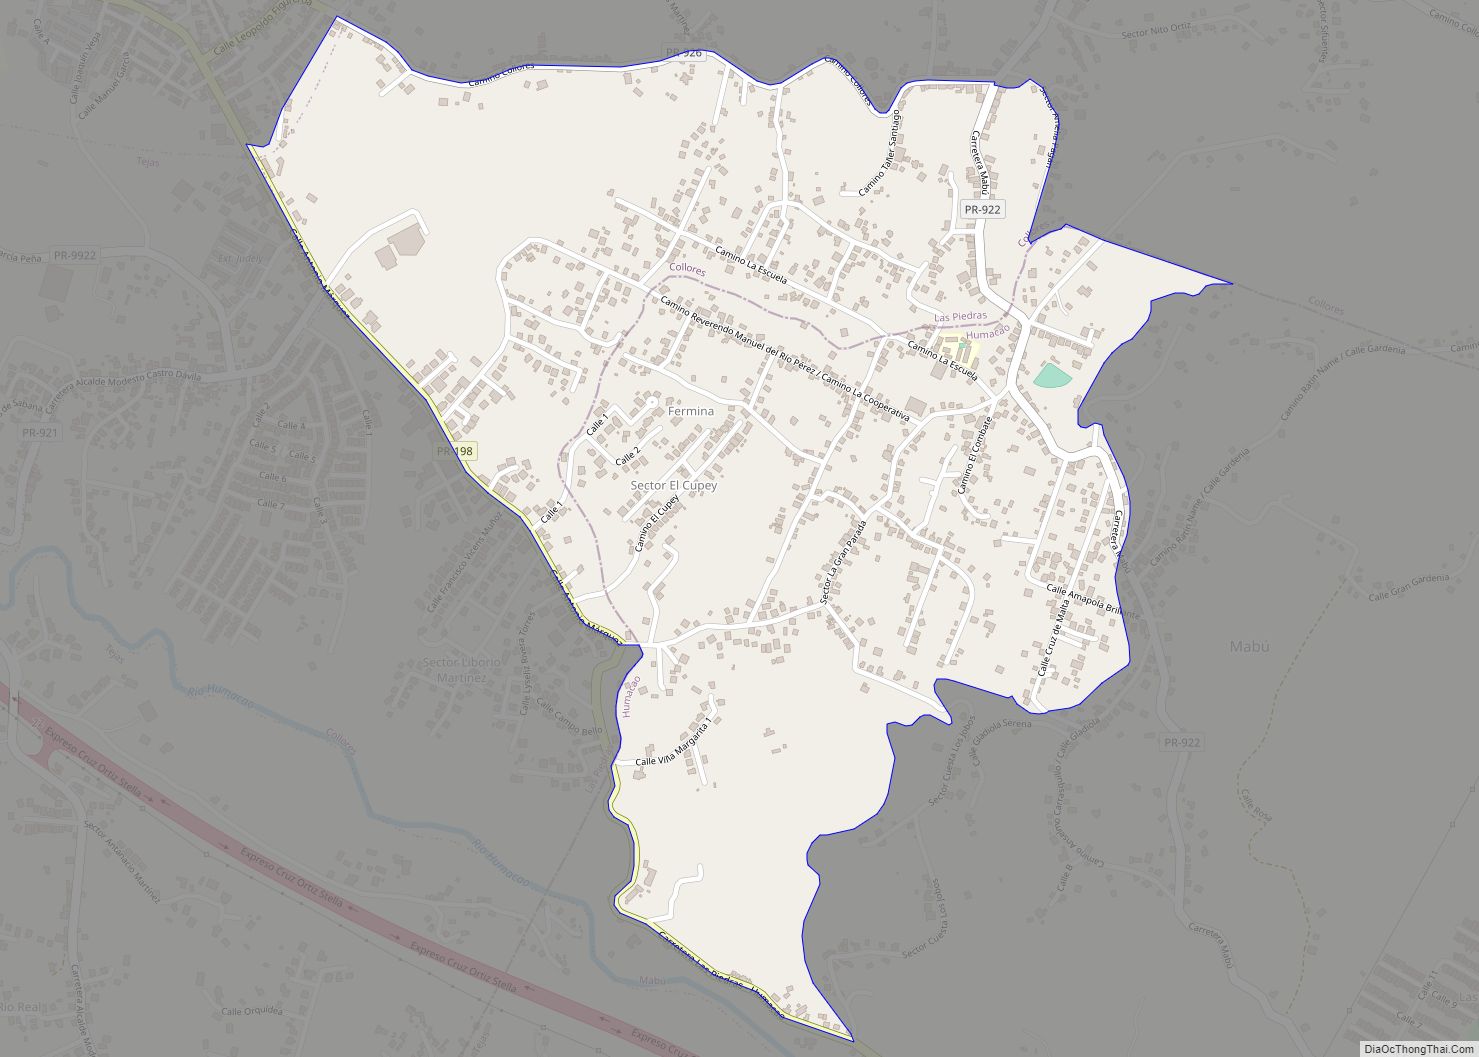 Map of La Fermina comunidad